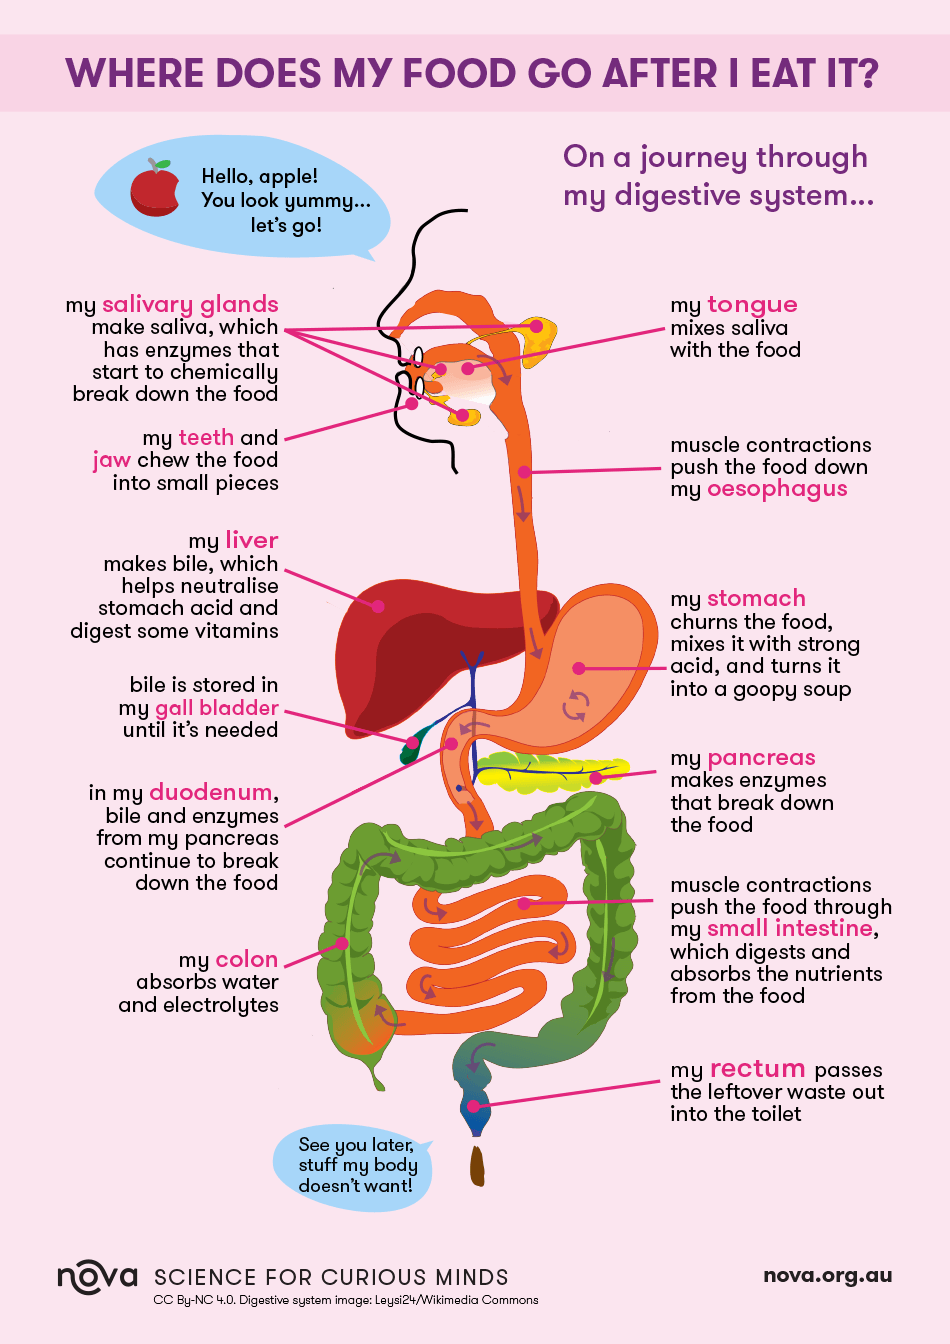 food travel through the body